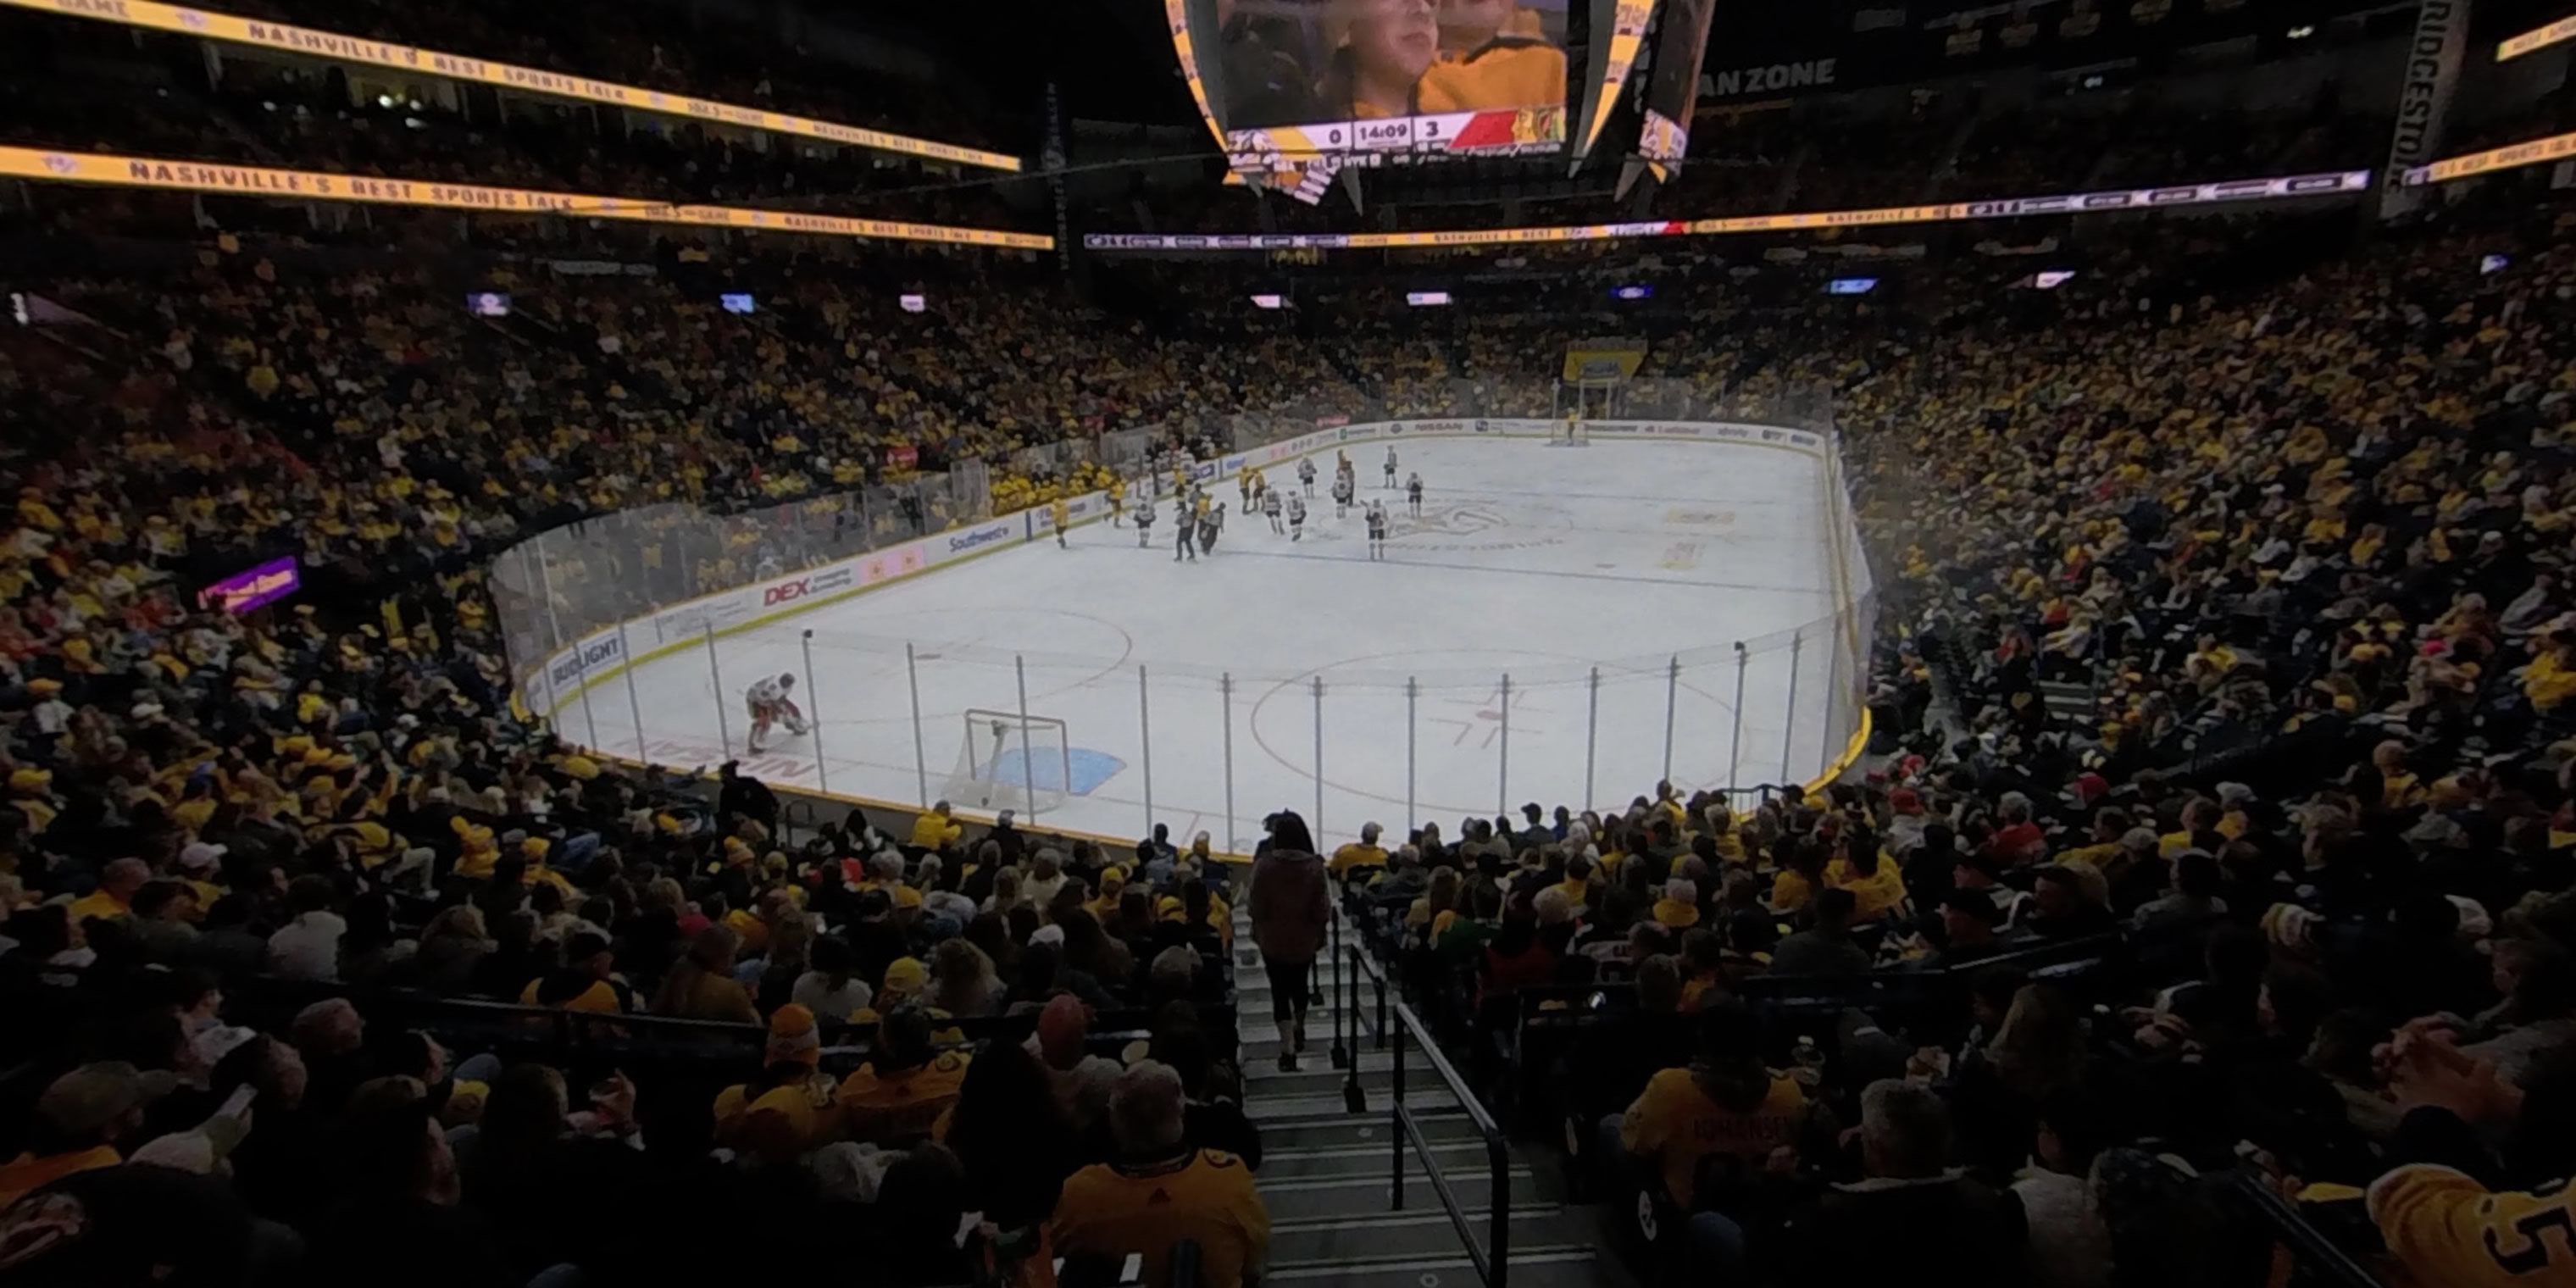 section 101 panoramic seat view  for hockey - bridgestone arena